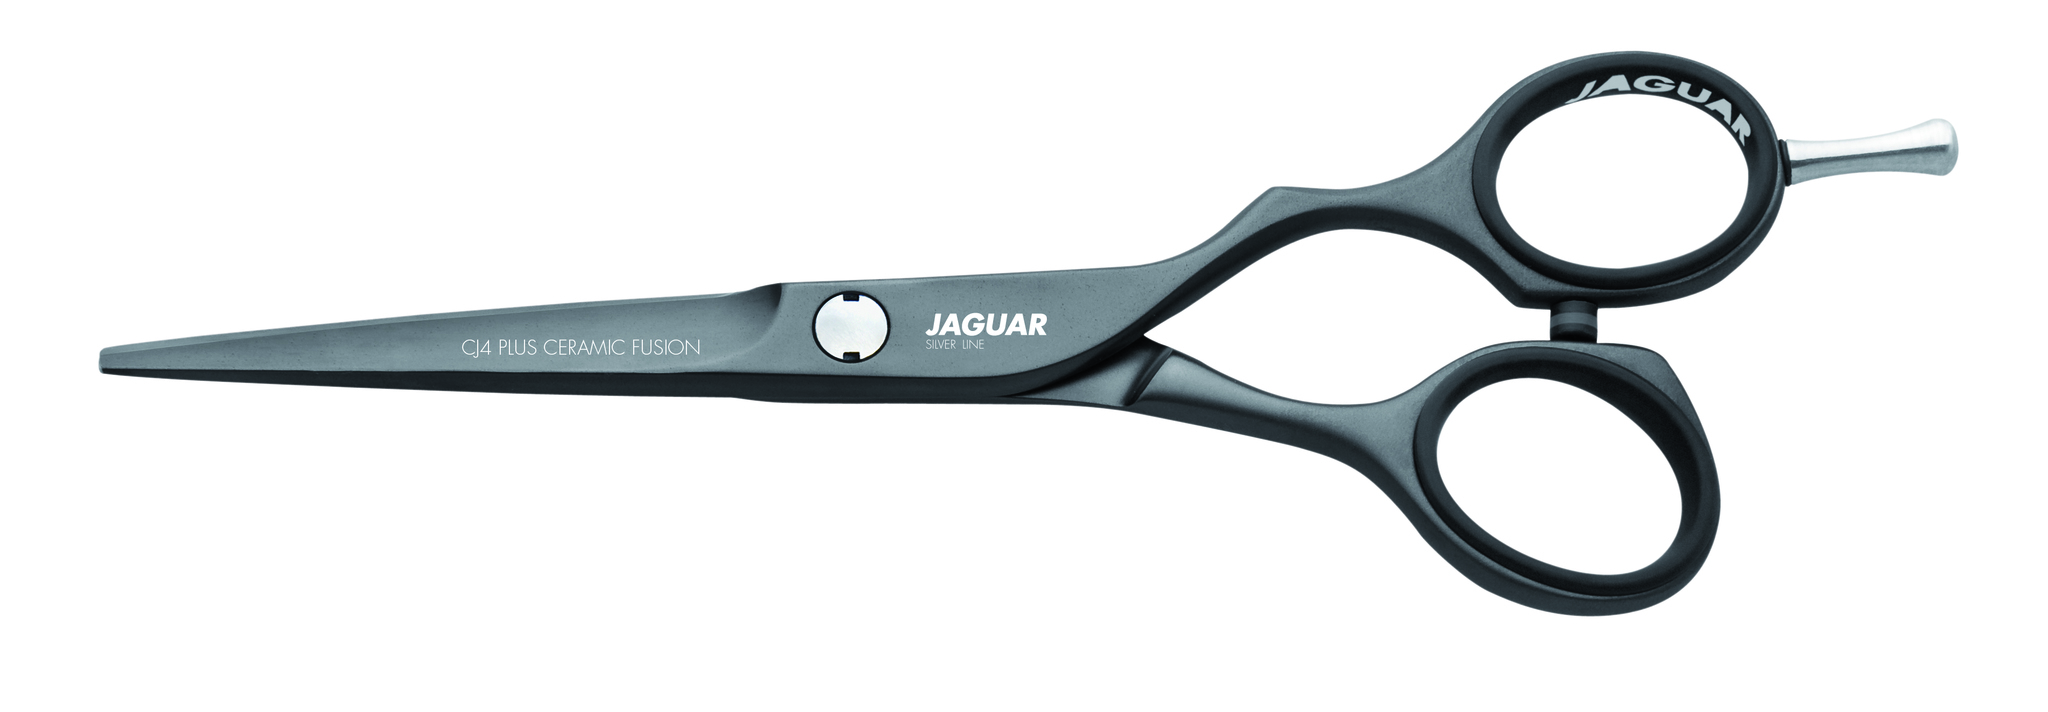 jaguar Silver Line CJ4 Plus CF 5.5"